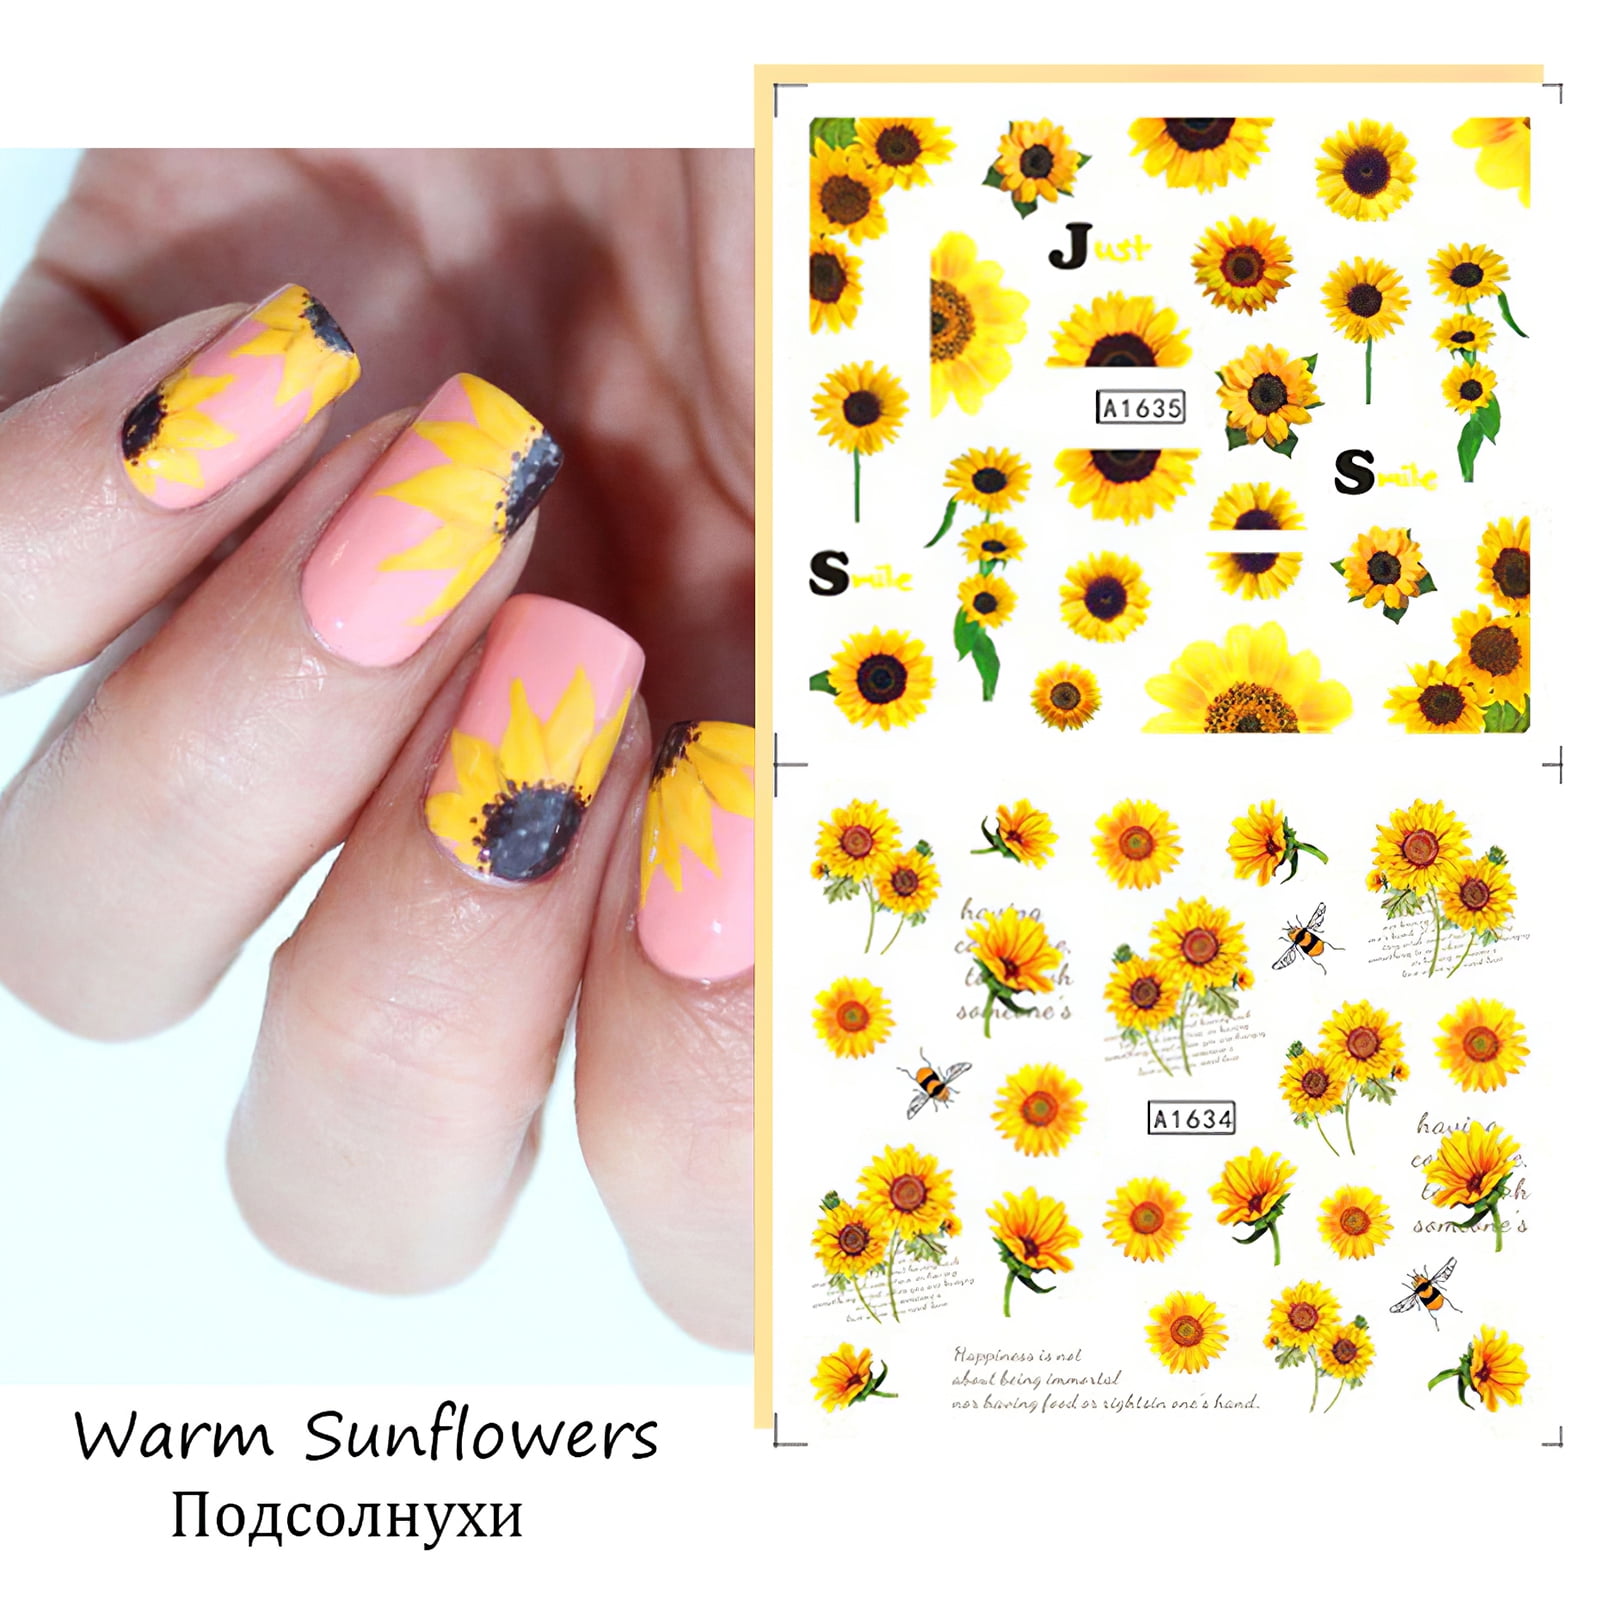 Spring Sunflower Nail Transfer Sticker Decals Sliders Manicures Nail Art  Decor | eBay